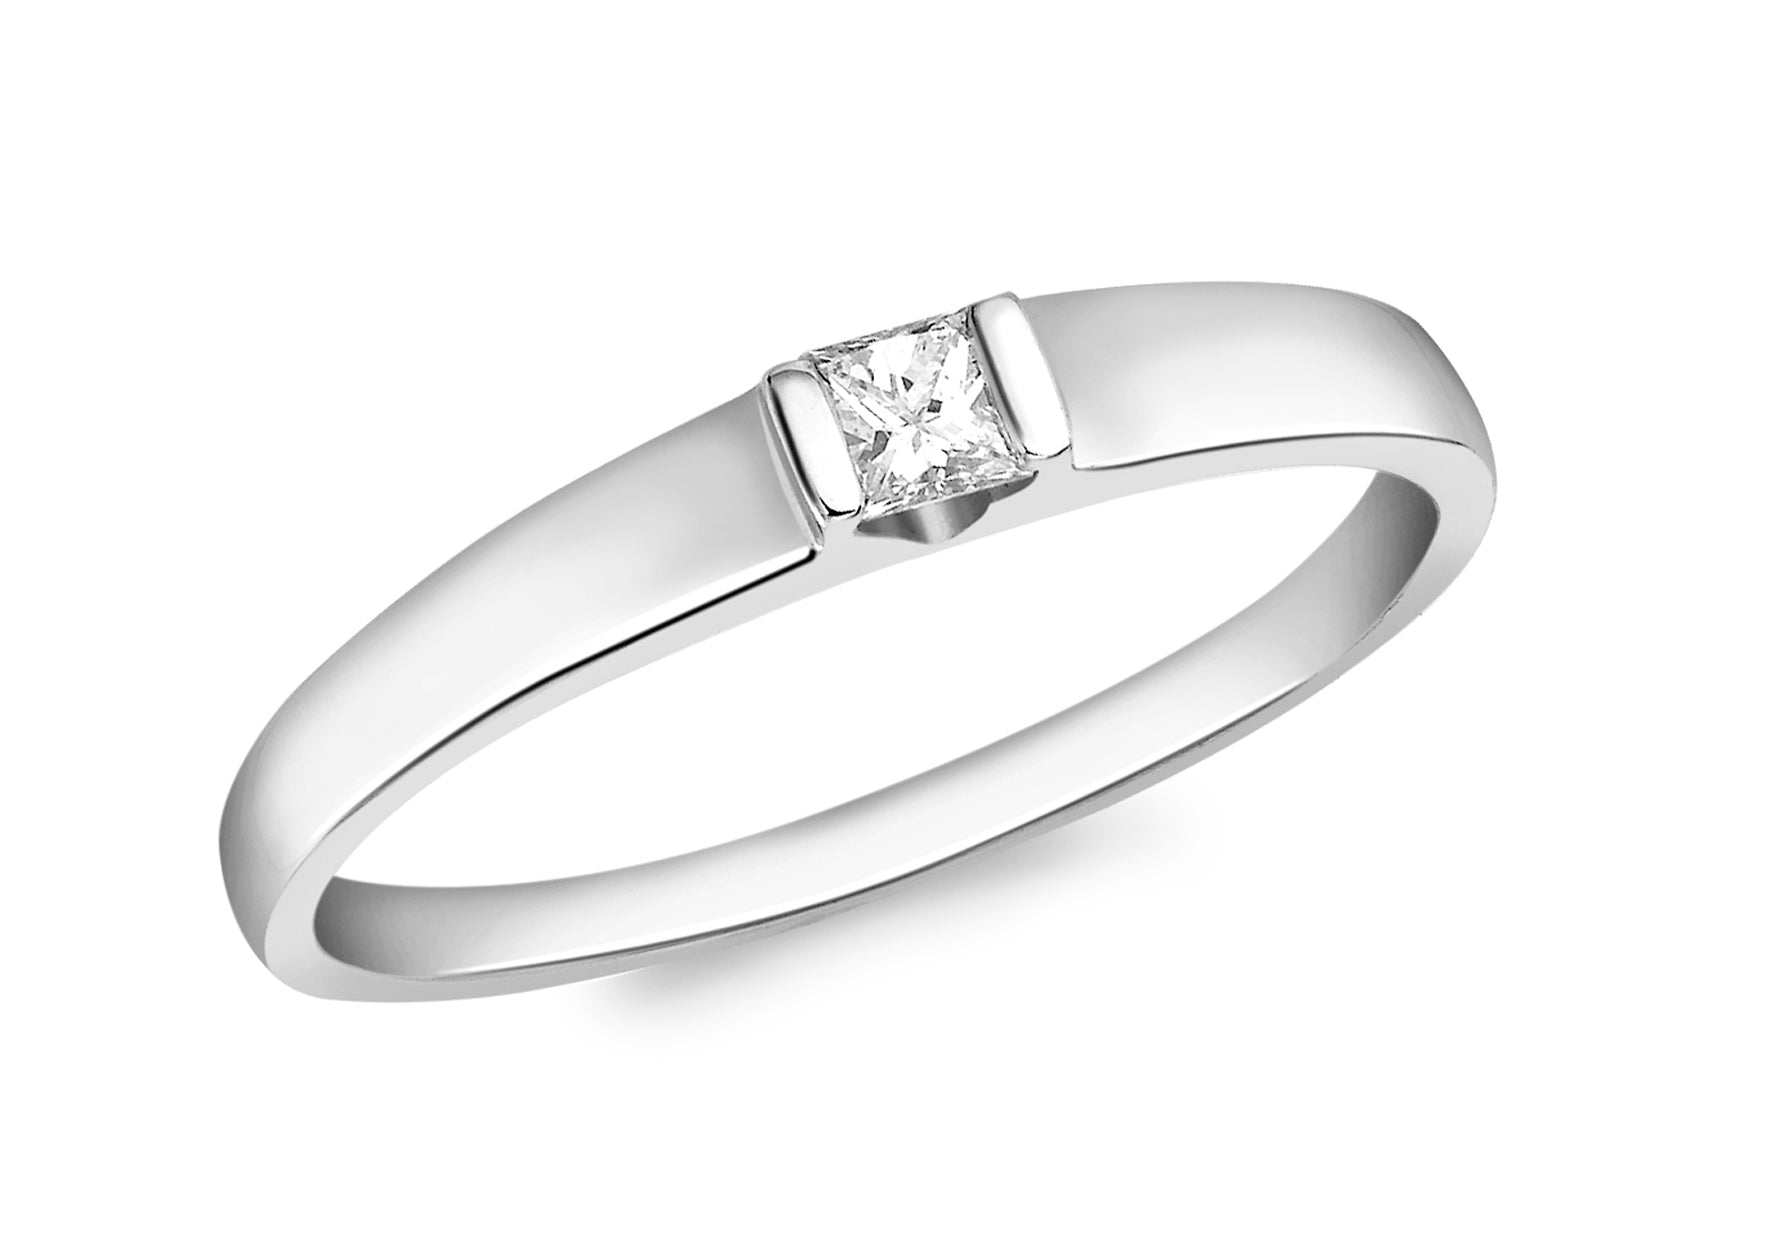 Tension Diamond Ring Set — 33 Jewels at El Paseo